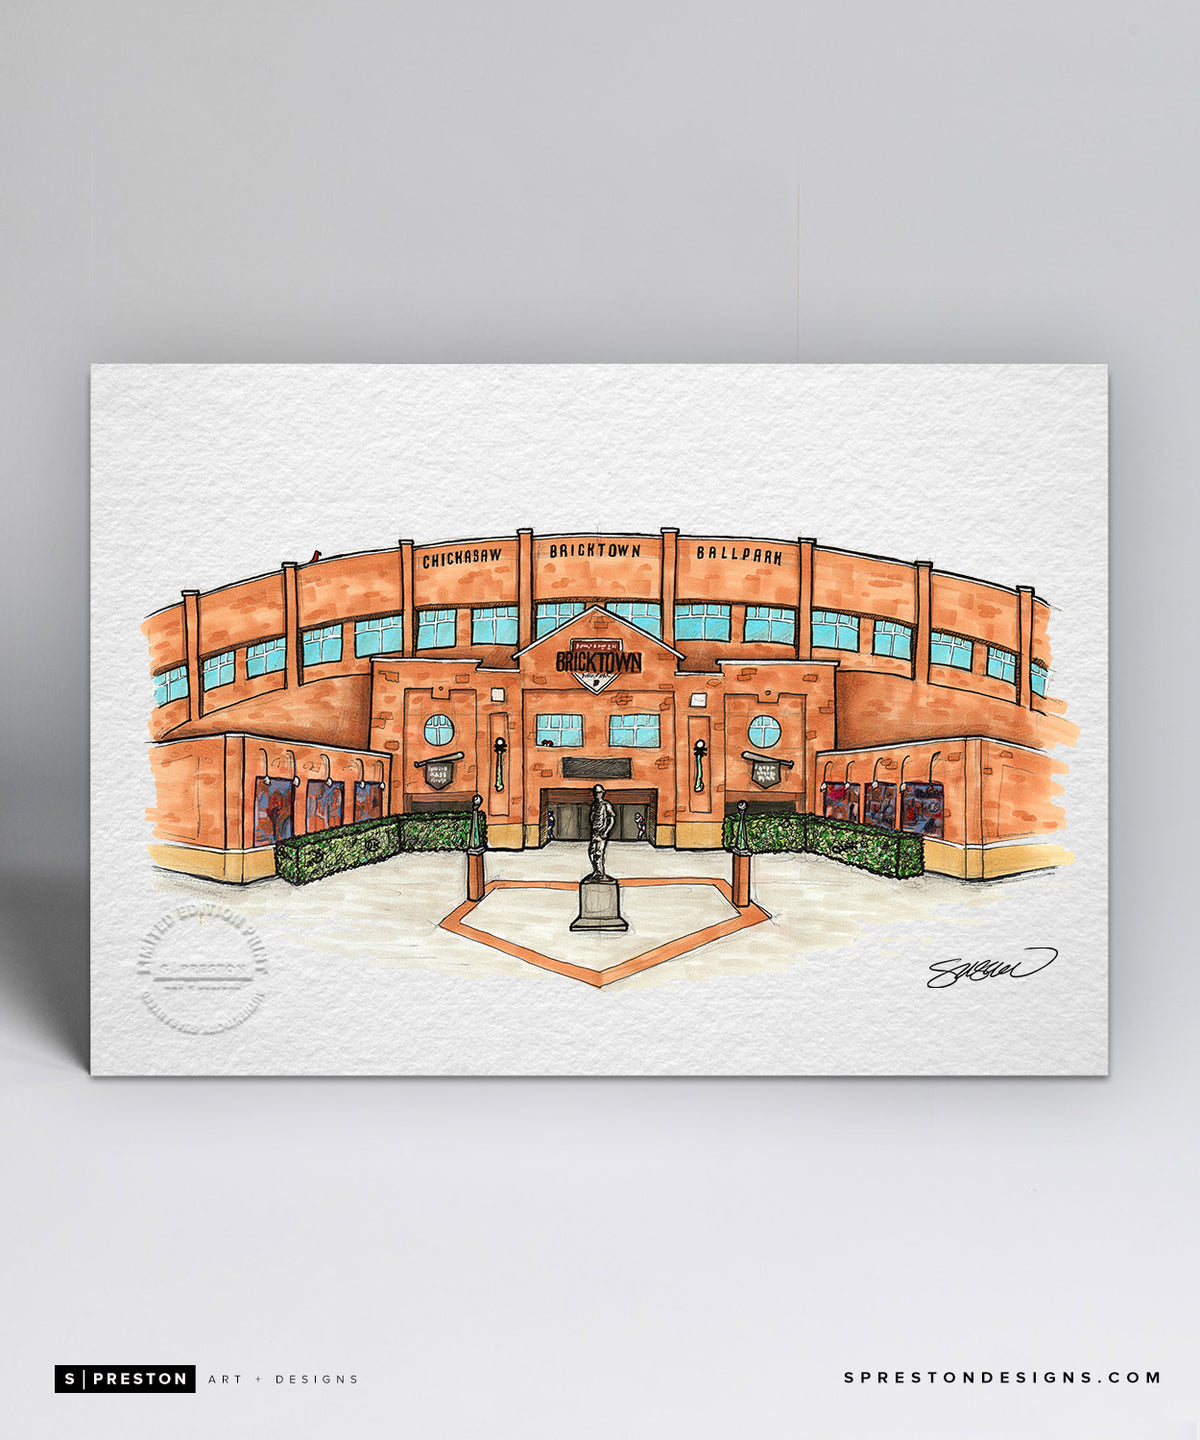 Chickasaw Bricktown Ballpark Sketch Illustration - Oklahoma City Limited Edition - Florida State University - S. Preston Art + Designs